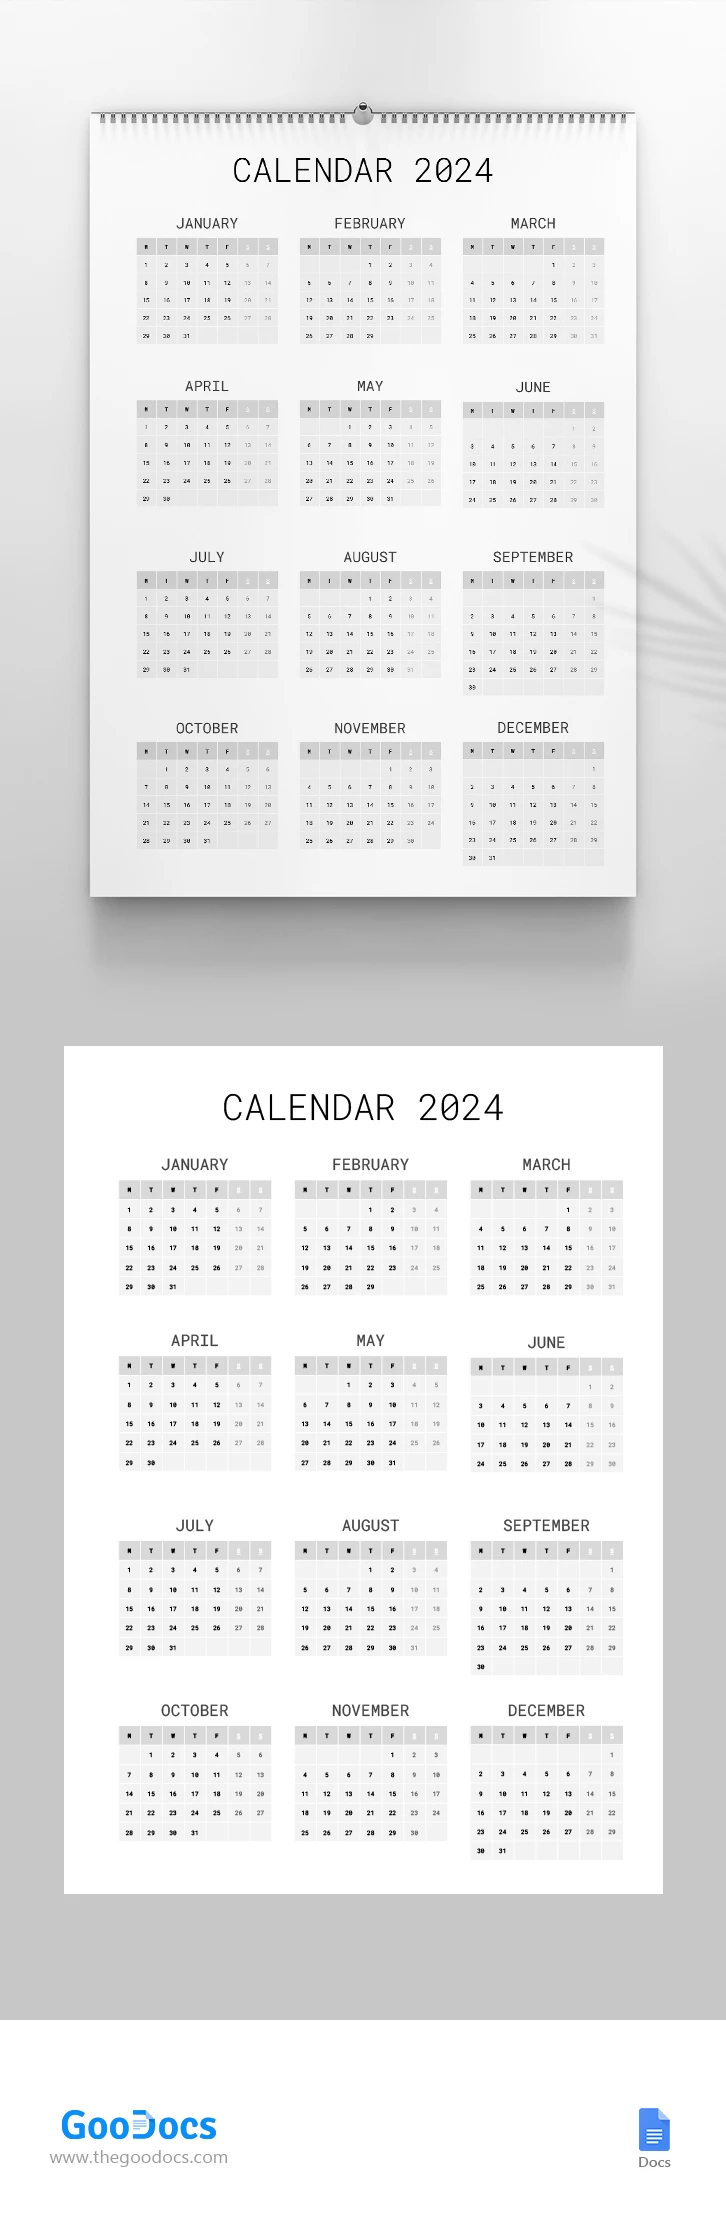 Calendario Annuale 2024 - free Google Docs Template - 10068199